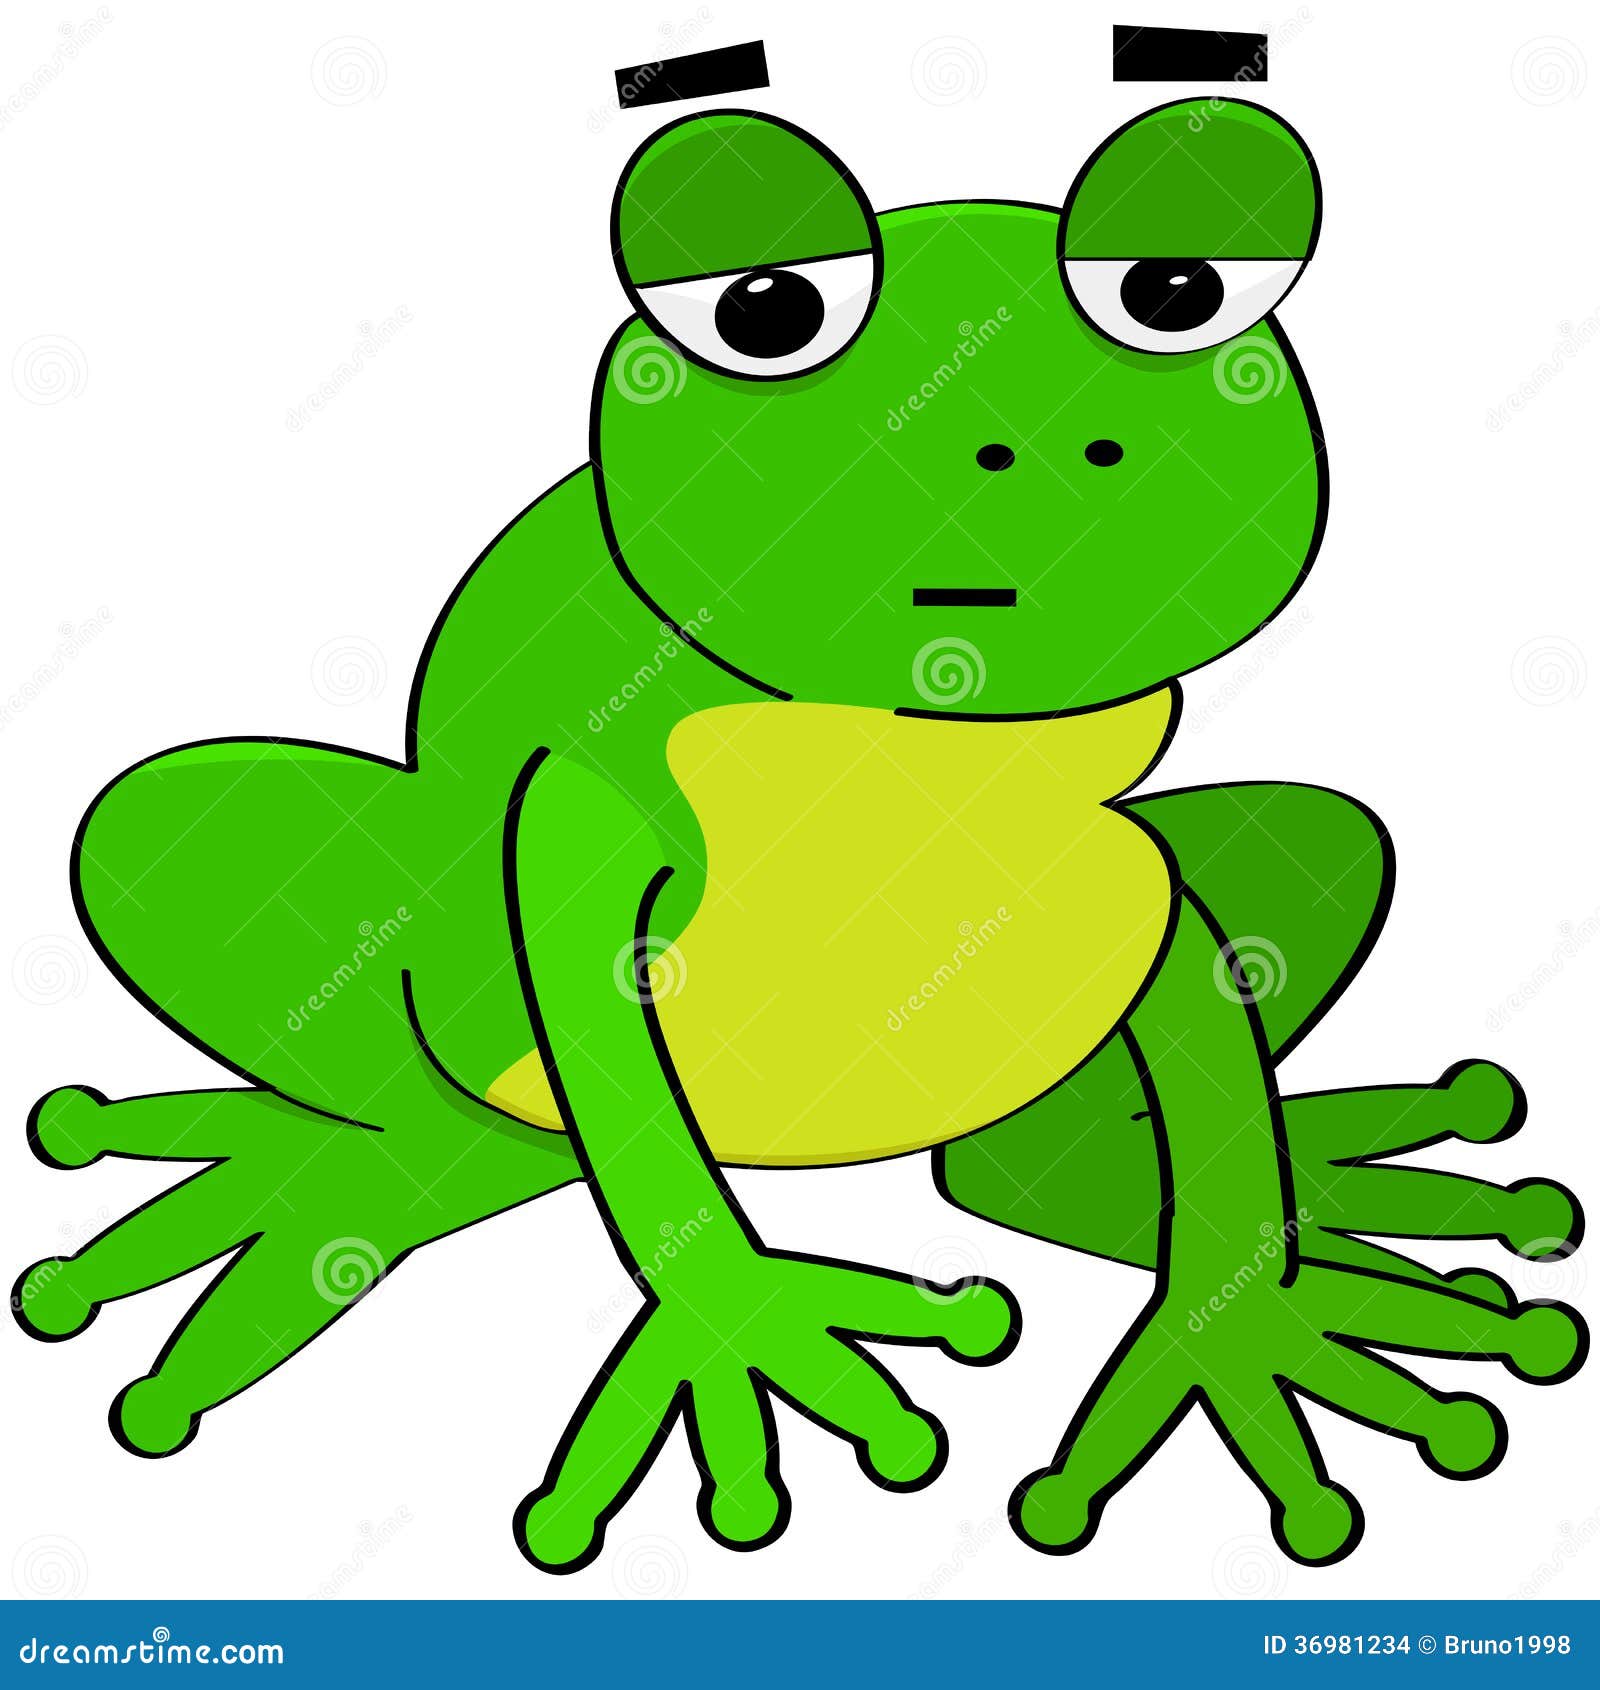 Bored frog stock vector. Illustration of cartoon, face - 36981234